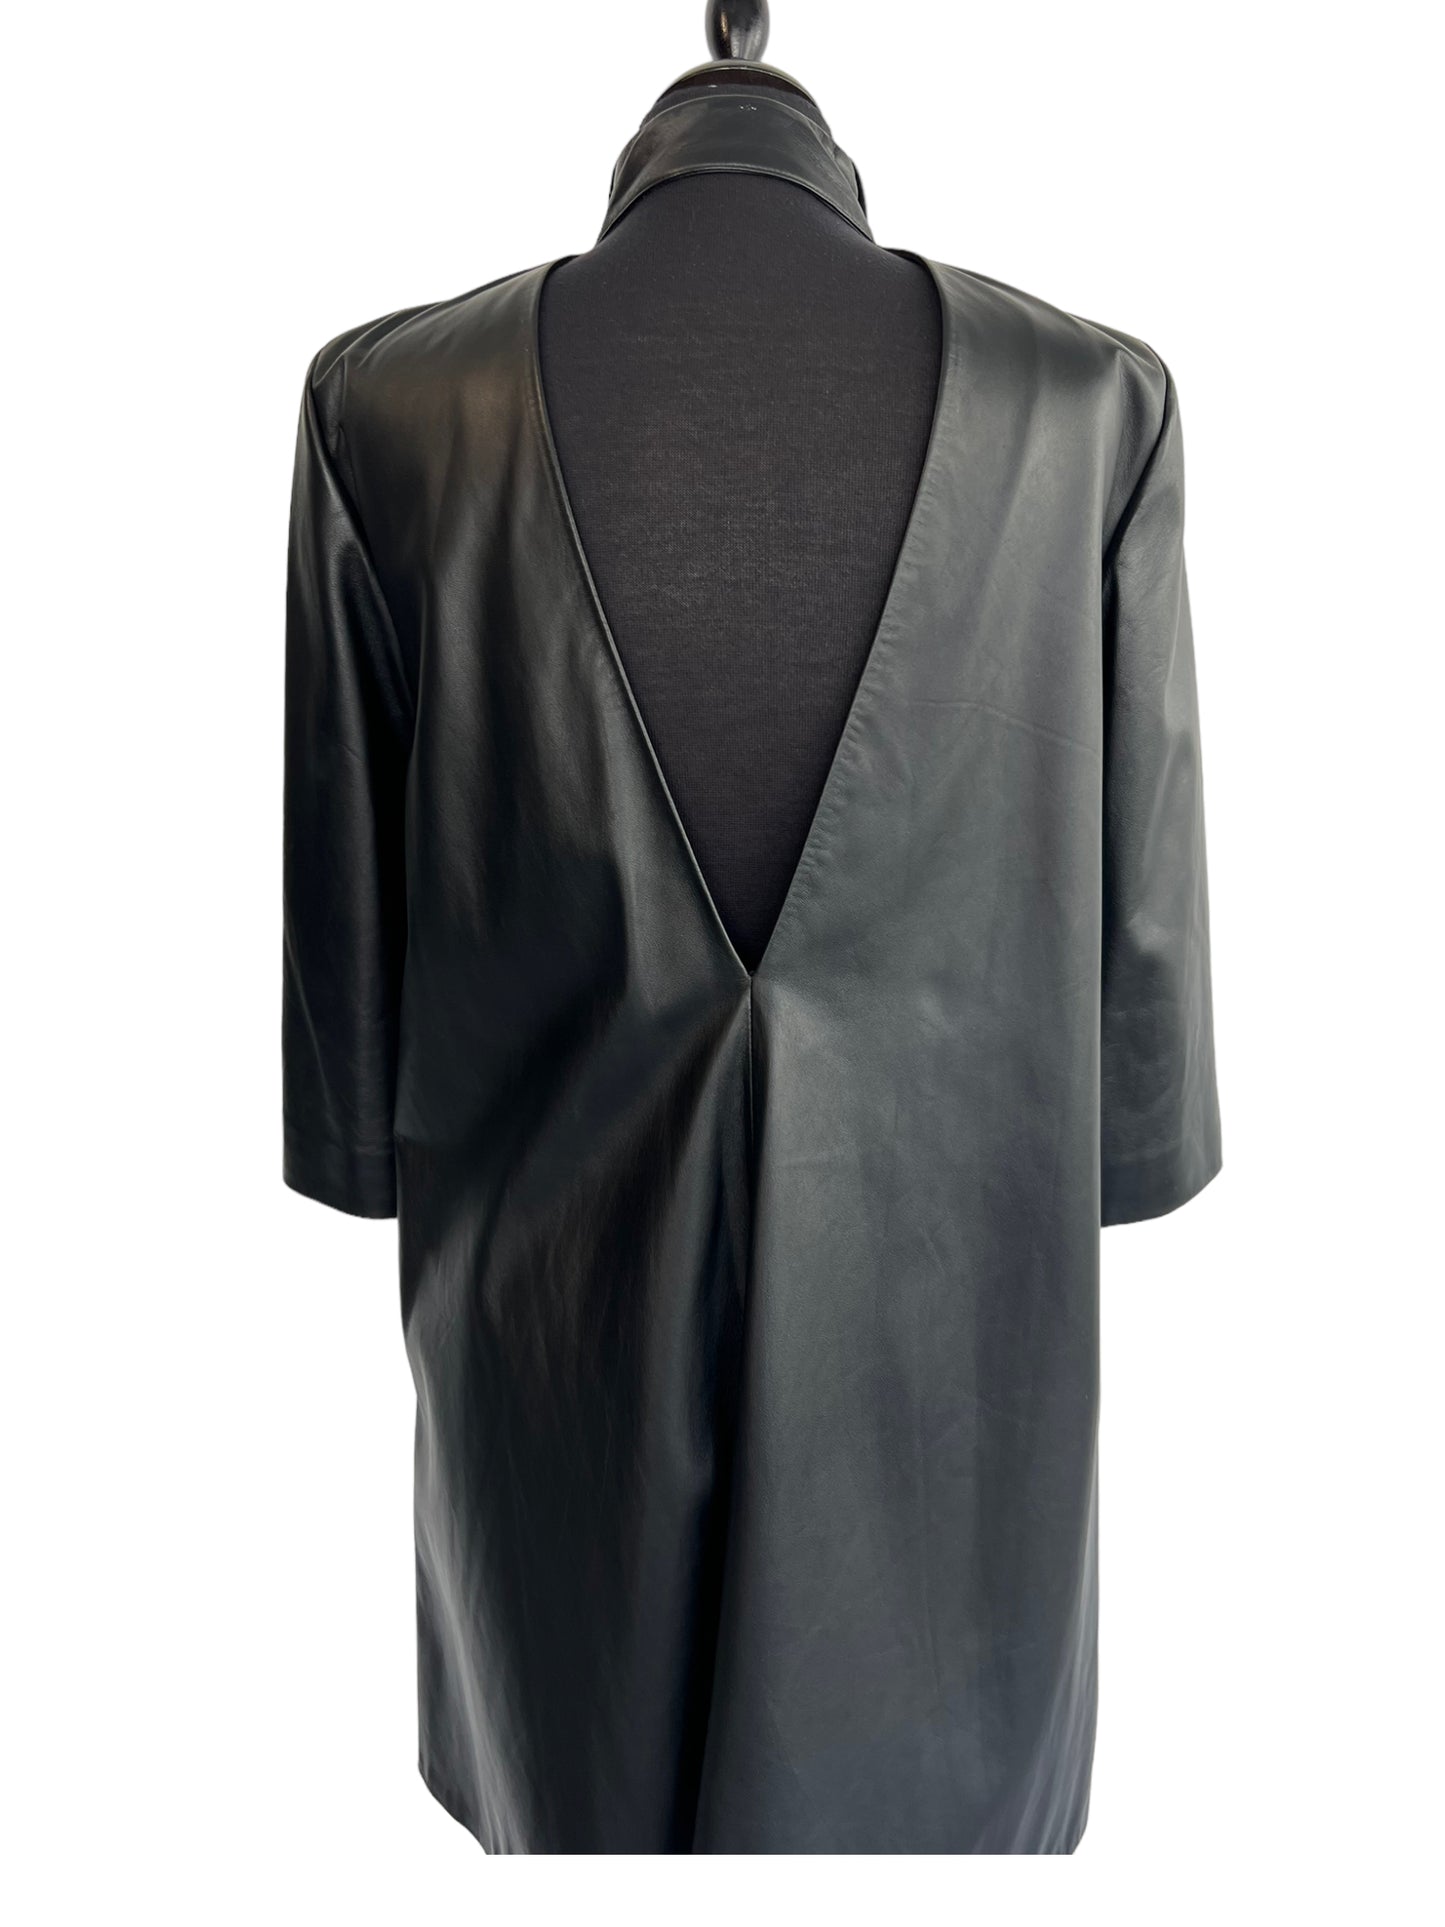 PRITCH London -  Leather Shirt Dress - Size M